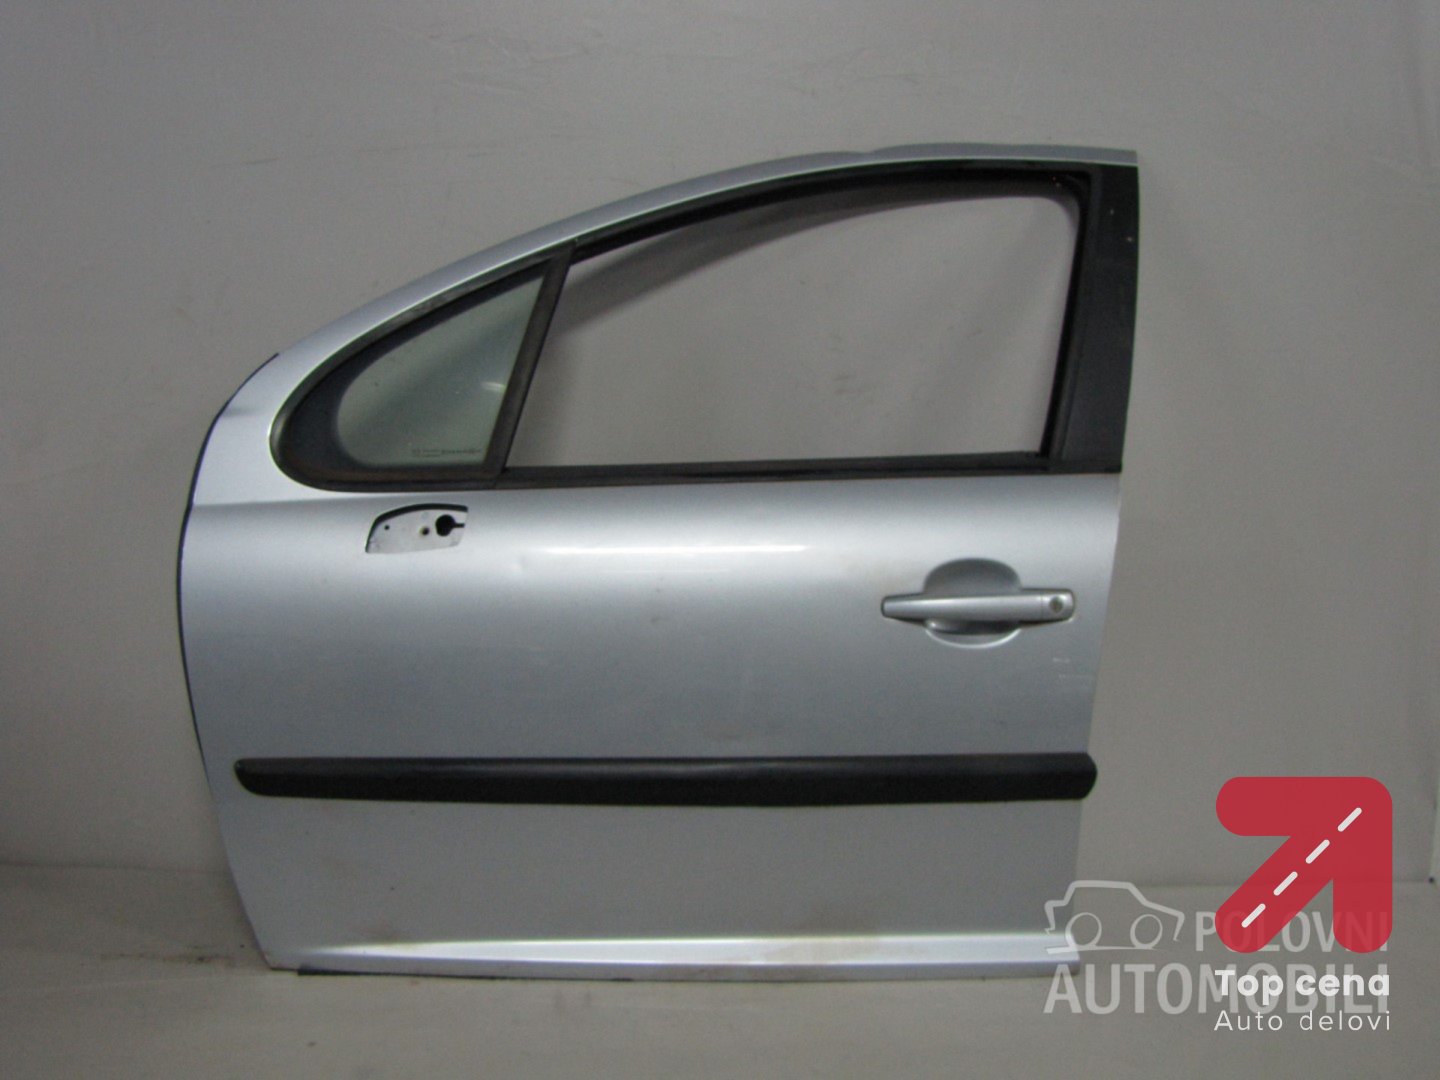 Vrata prednja leva za Peugeot 207 od 2009. do 2012. god.